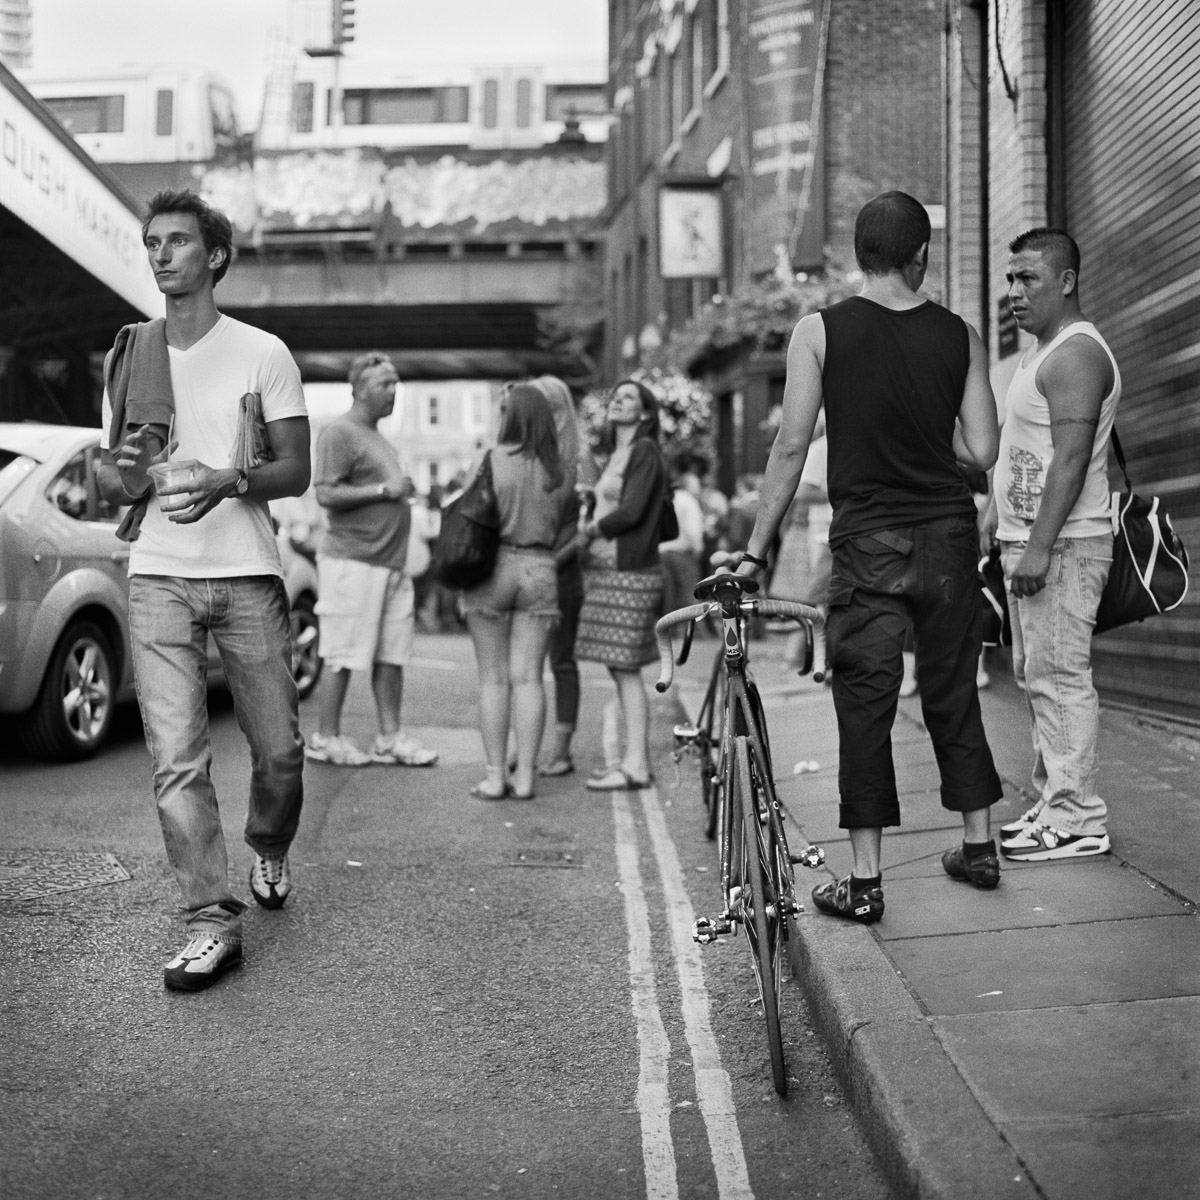 Street Photography London 120 Film  - Stoney Street, London